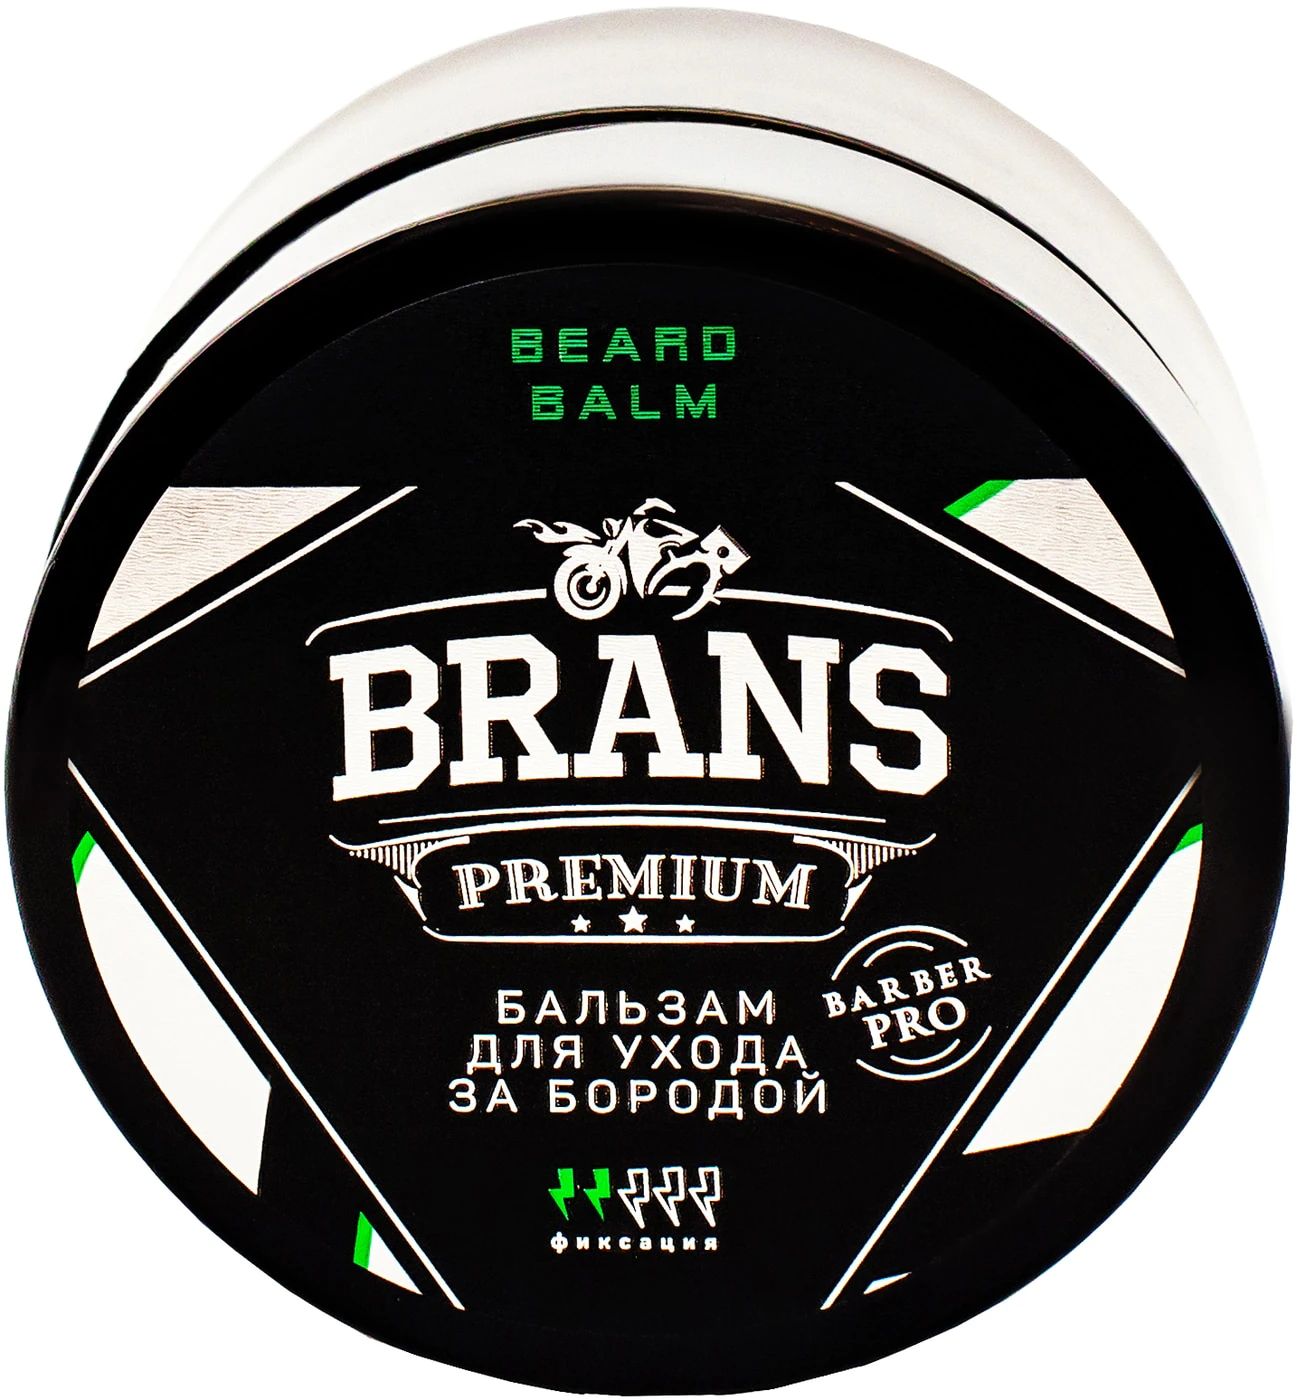 proraso wood and spice набор для ухода за бородой шампунь масло бальзам Бальзам Brans Premium для ухода за бородой 50 мл